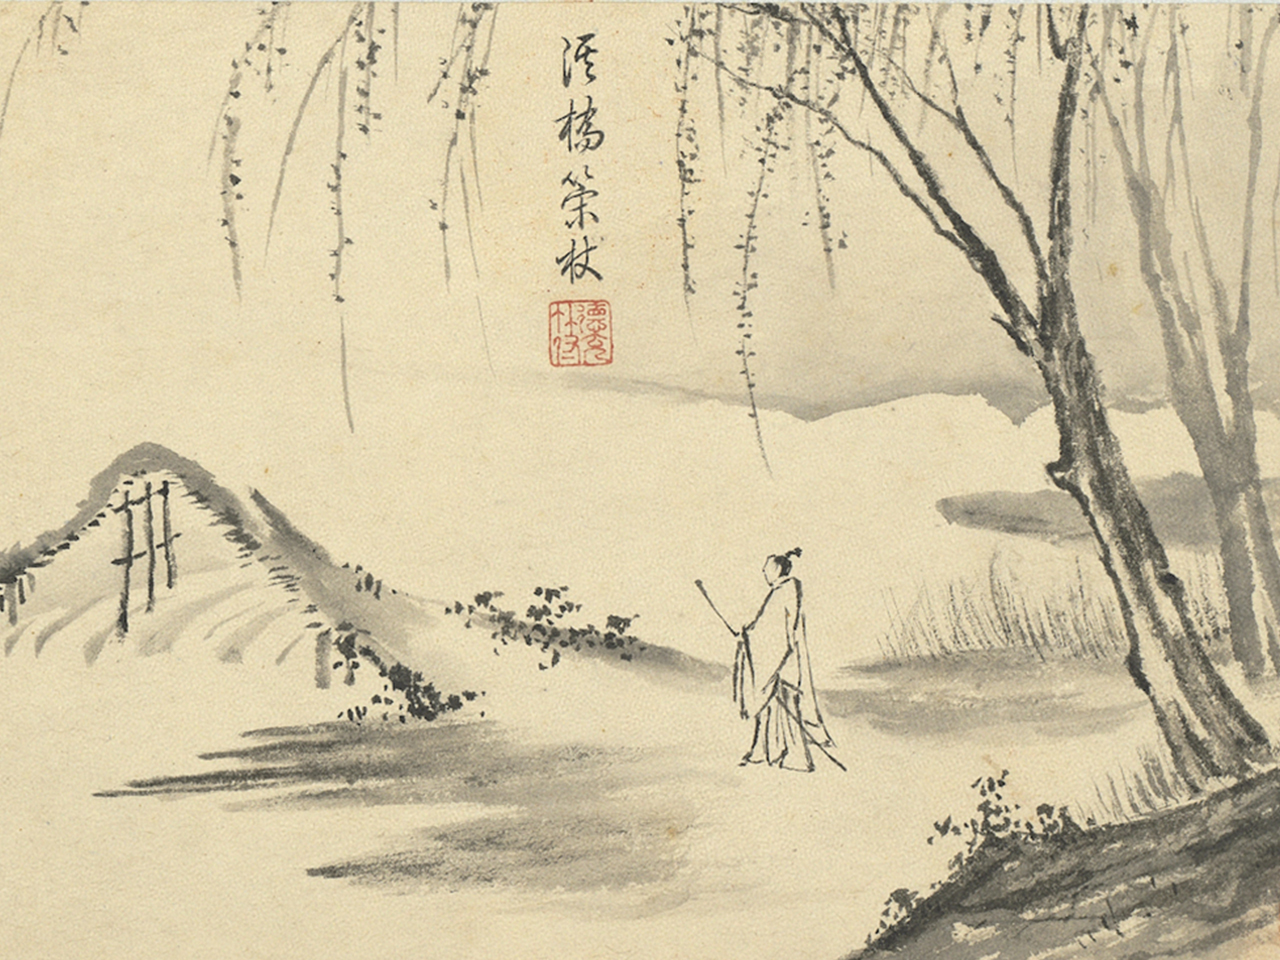 Copies of Xia Sen‘s Landscape